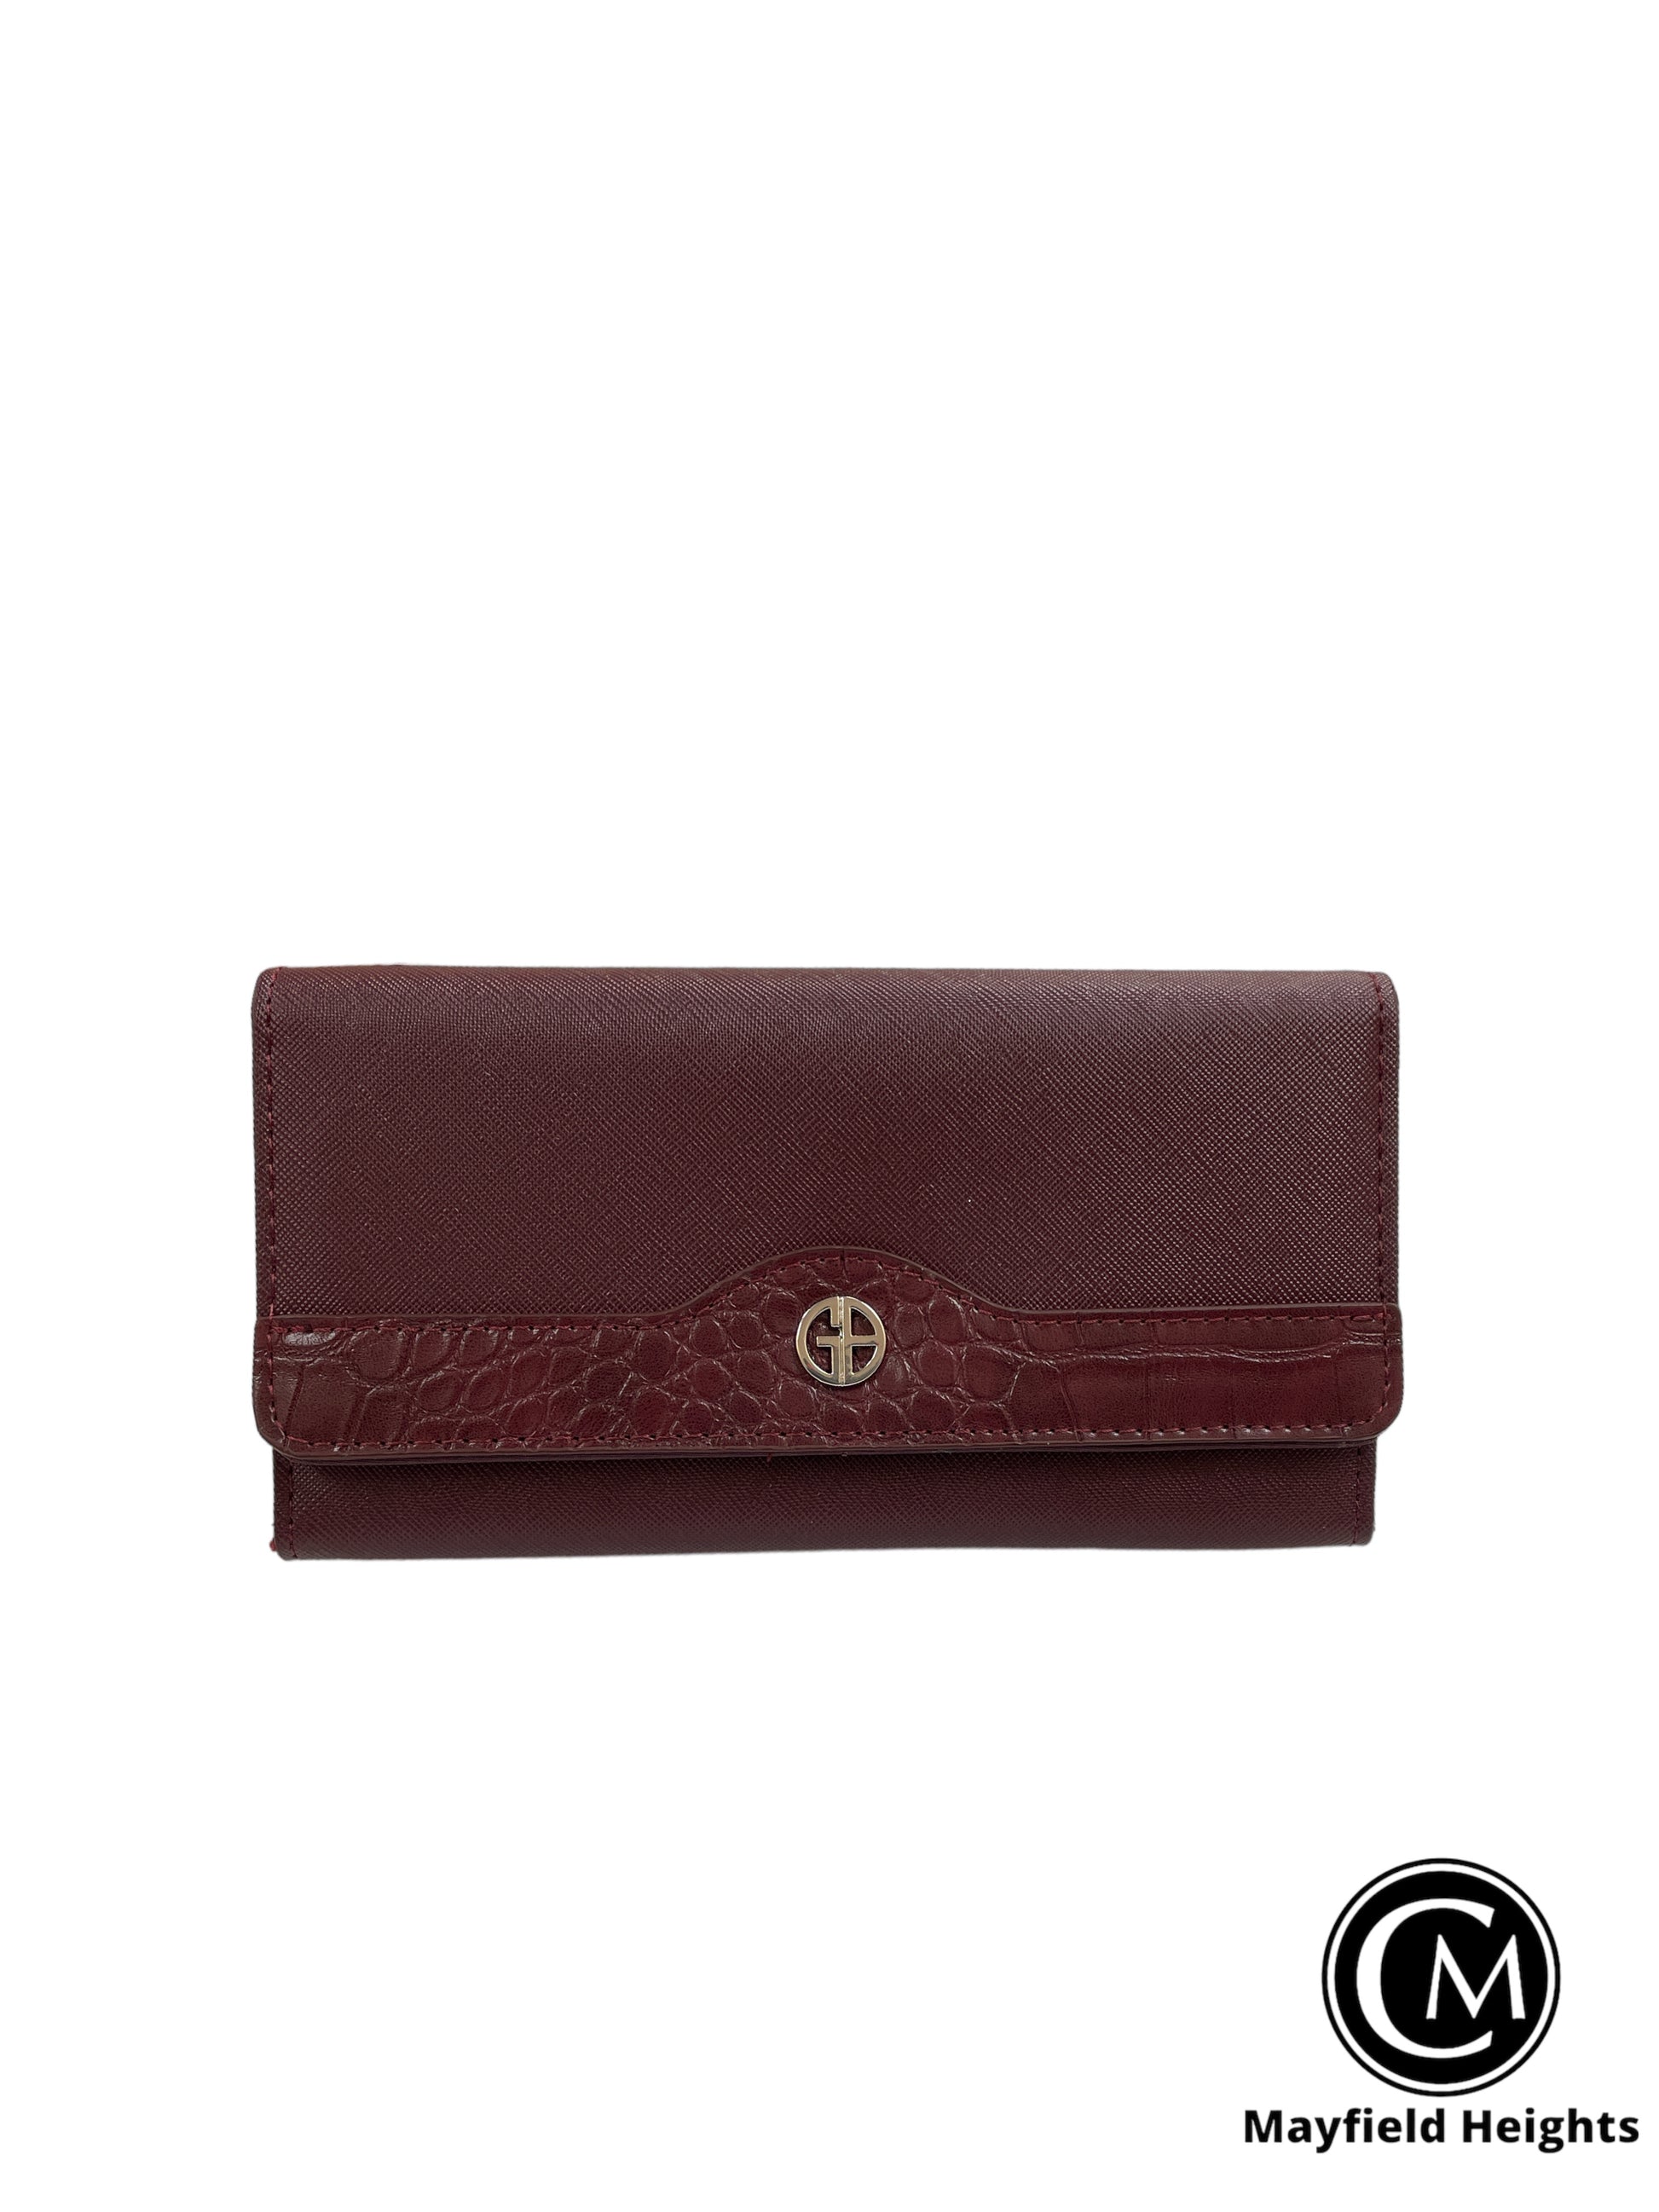 Wallet By Giani Bernini Size: Large